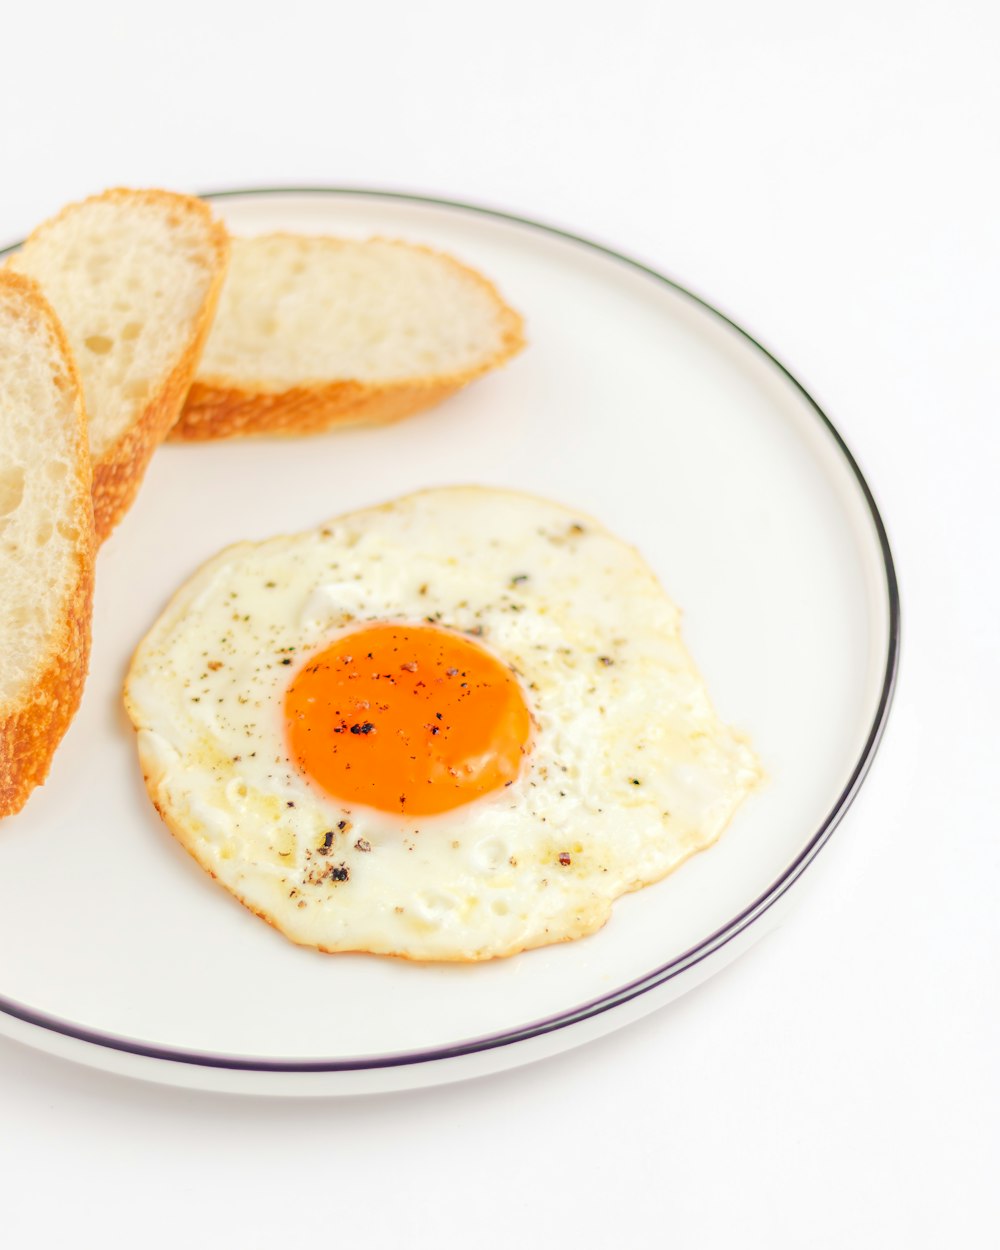 a fried egg and toast on a plate